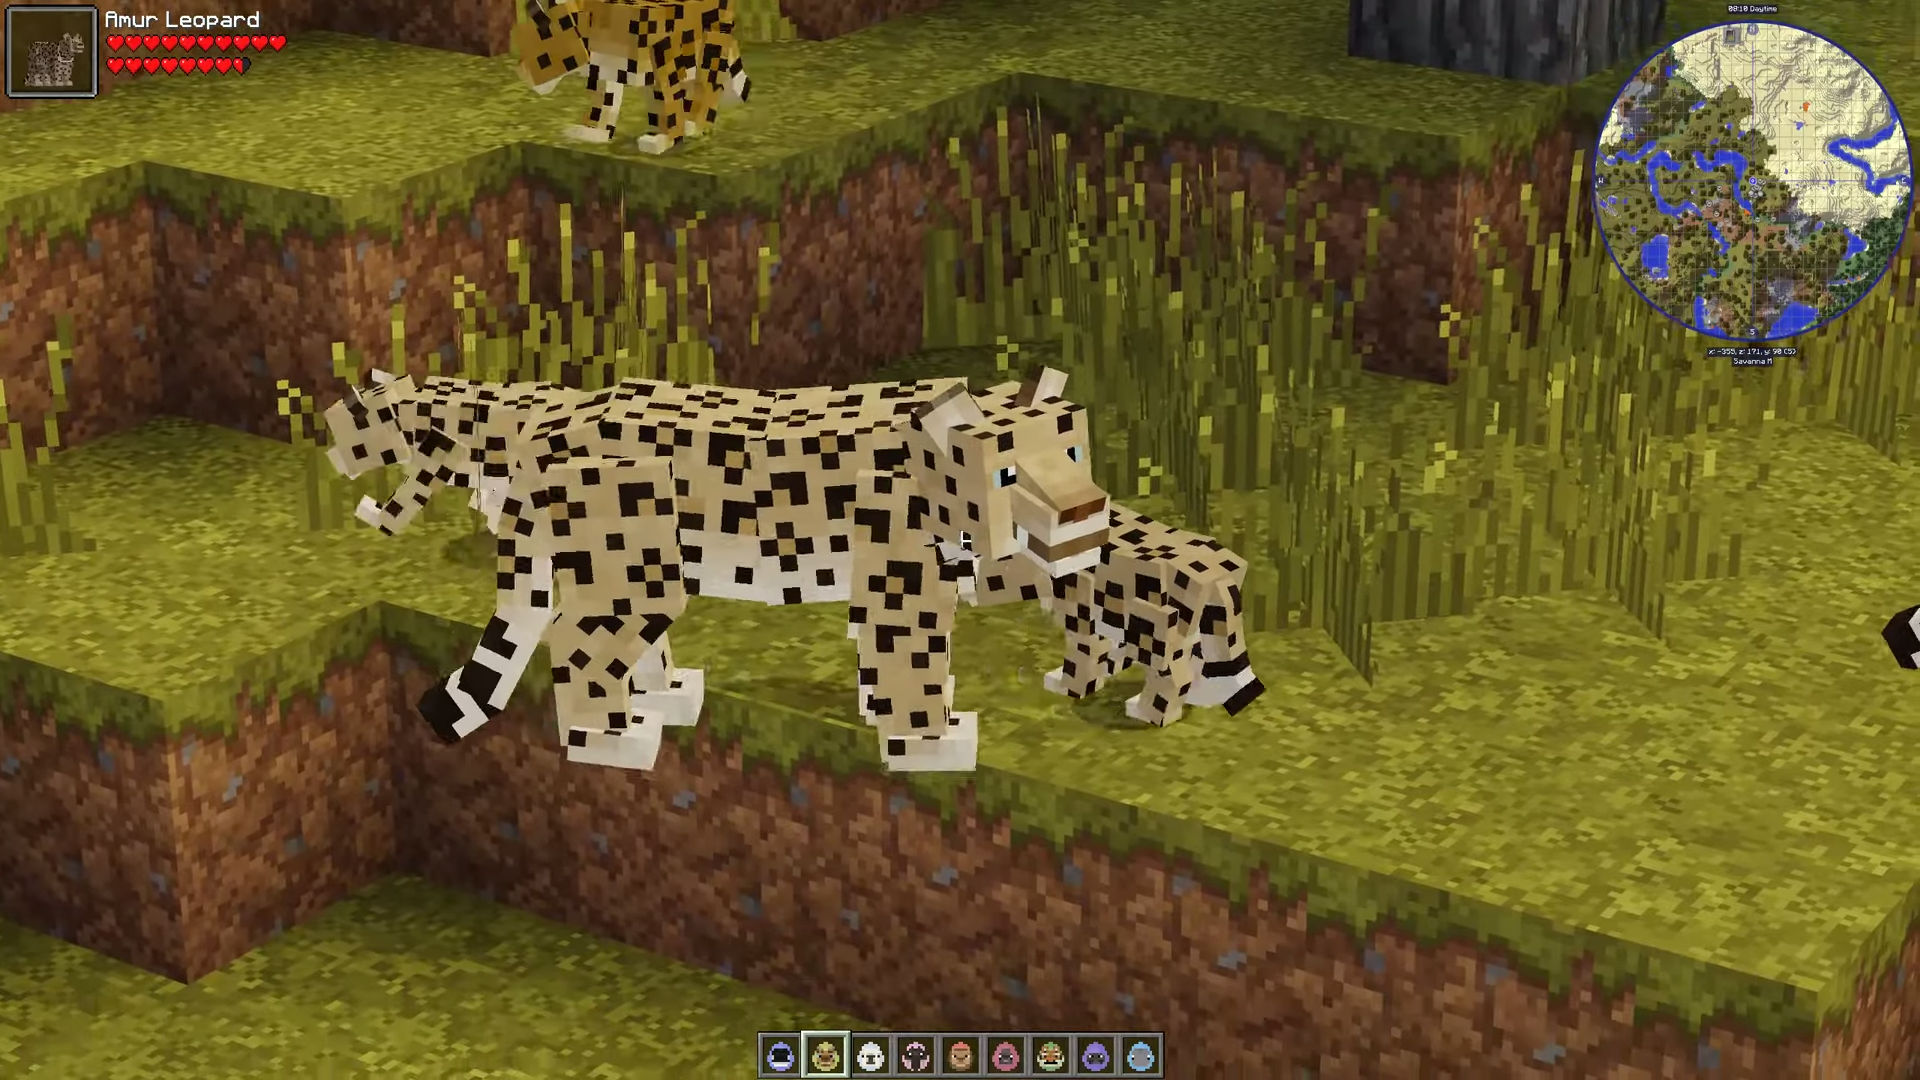 Top 10 Minecraft Best Mods For Animals Gamers Decide